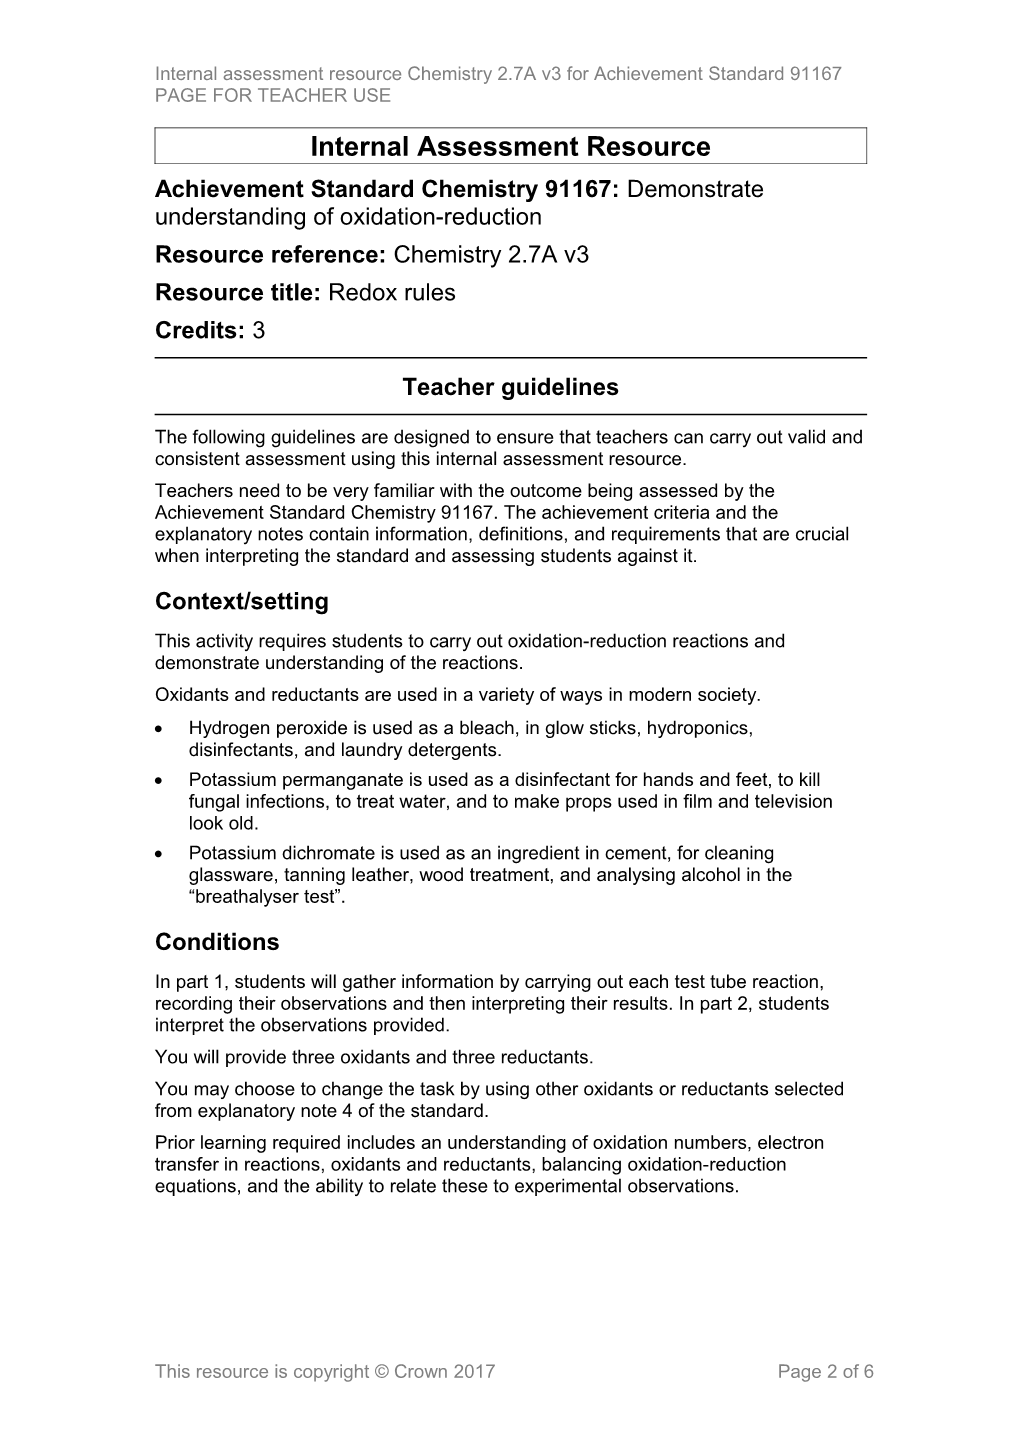 Level 2 Chemistry Internal Assessment Resource s2